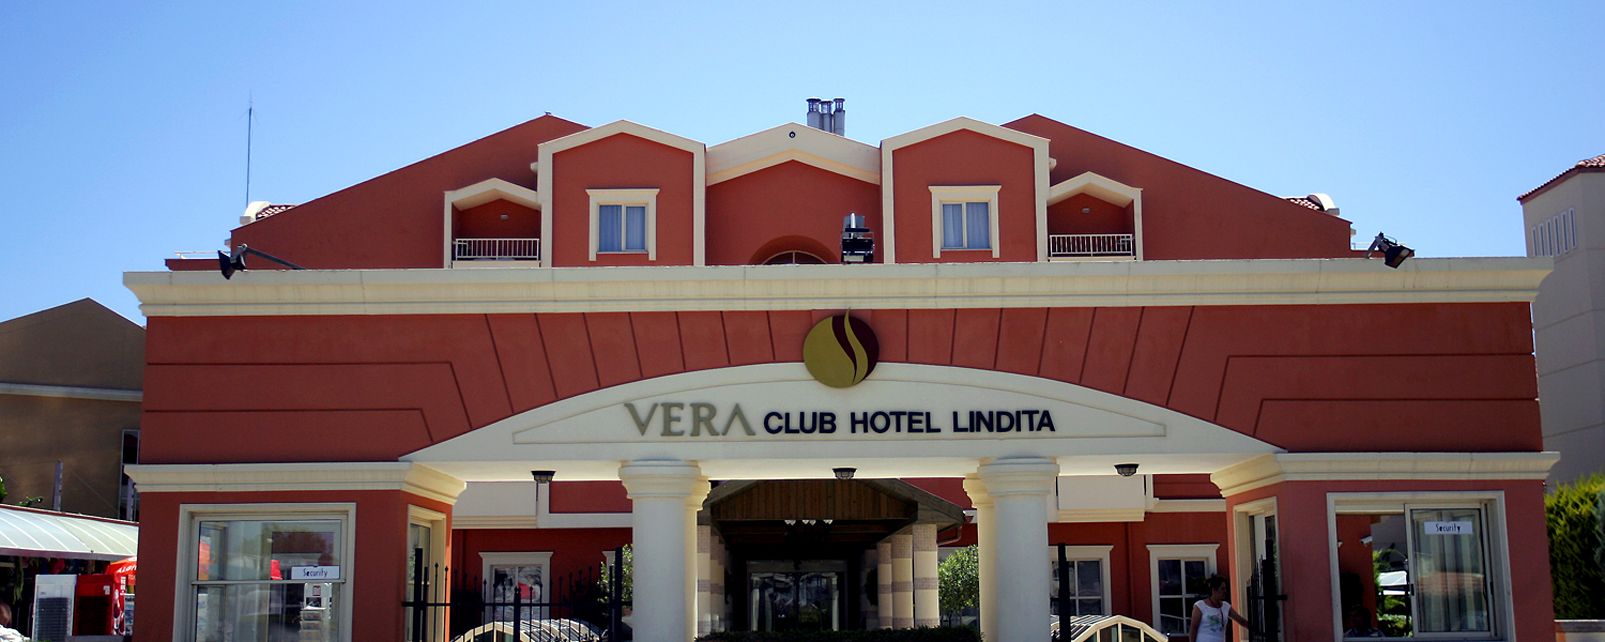 Hotel Vera Club Lindita